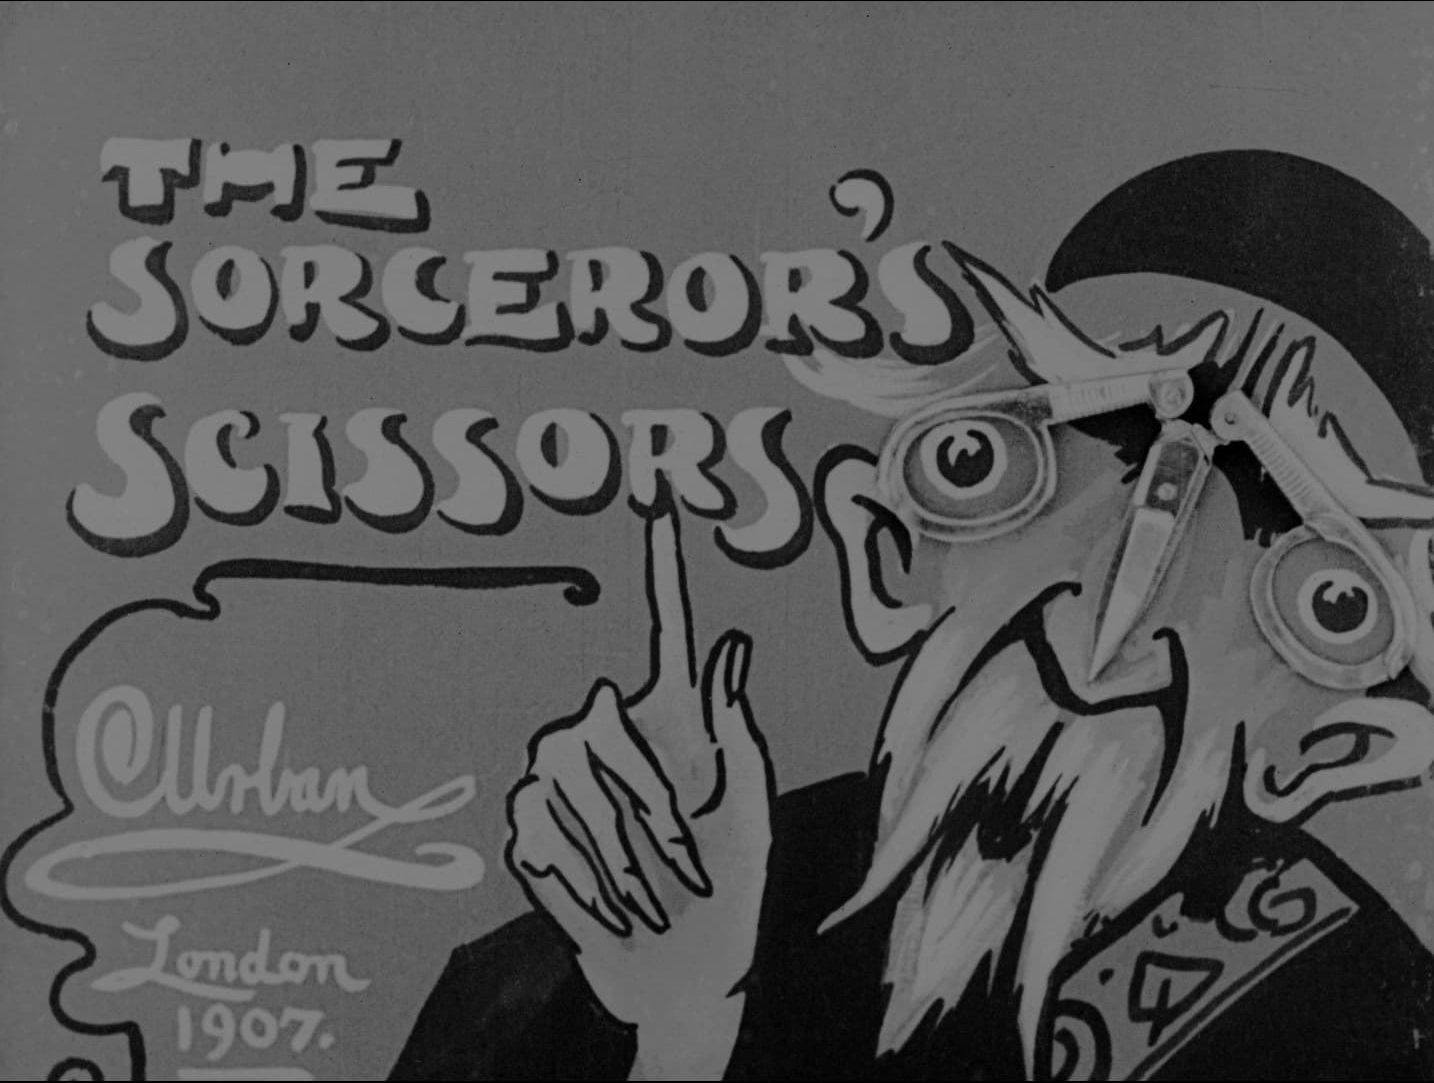 The Sorcerer's Scissors (1907)